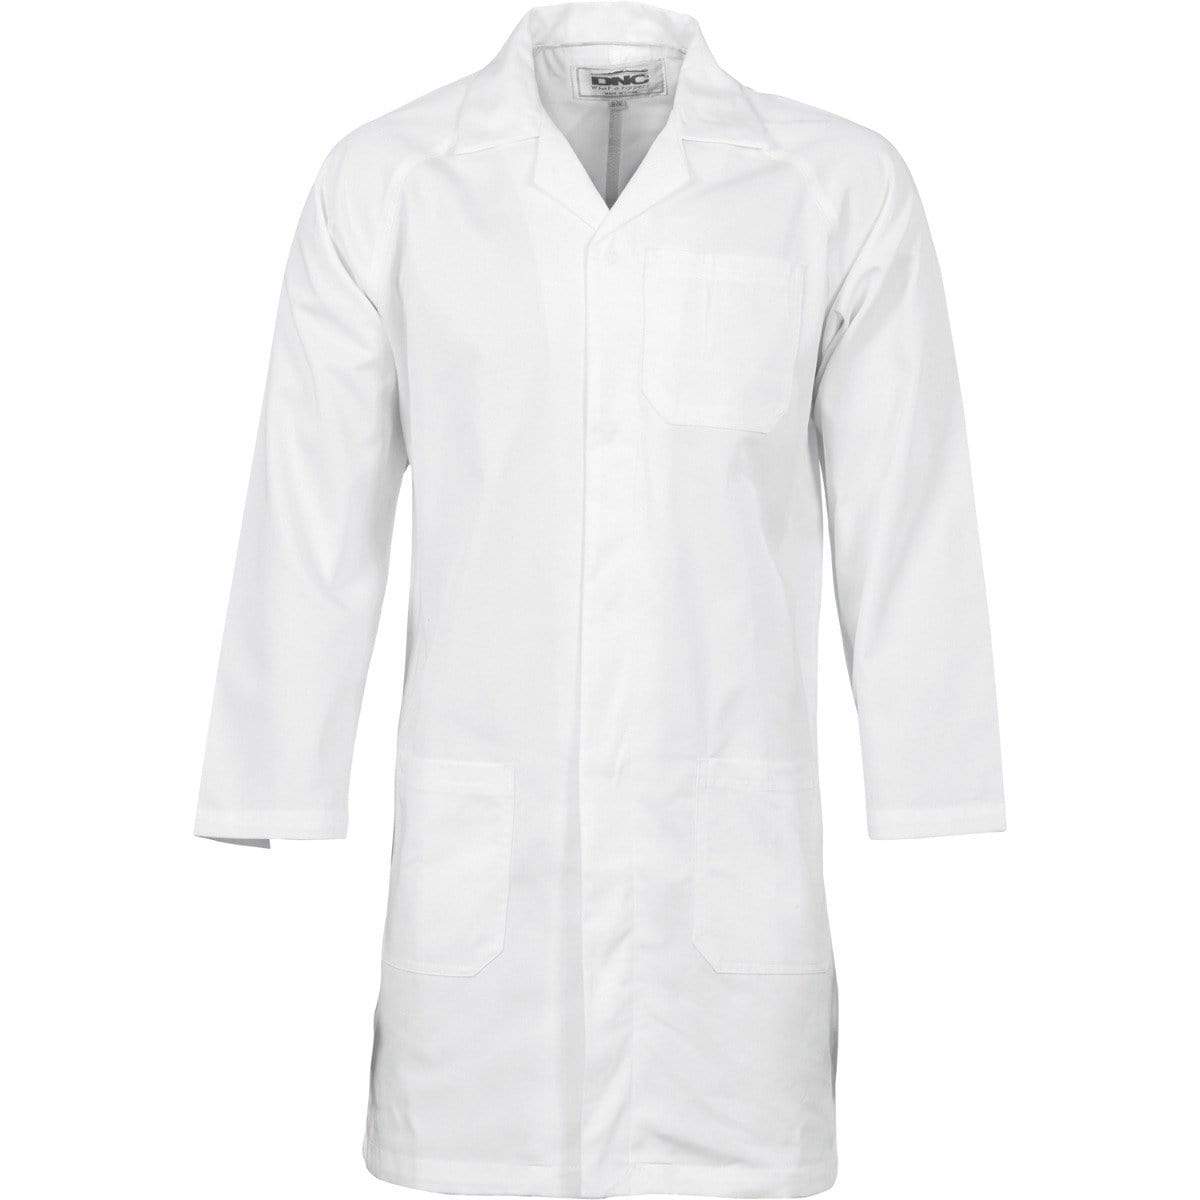 Dnc Workwear 200 Gsm Polyester Cotton Dust Coat (Lab Coat) - 3502 Work Wear DNC Workwear White 87R 